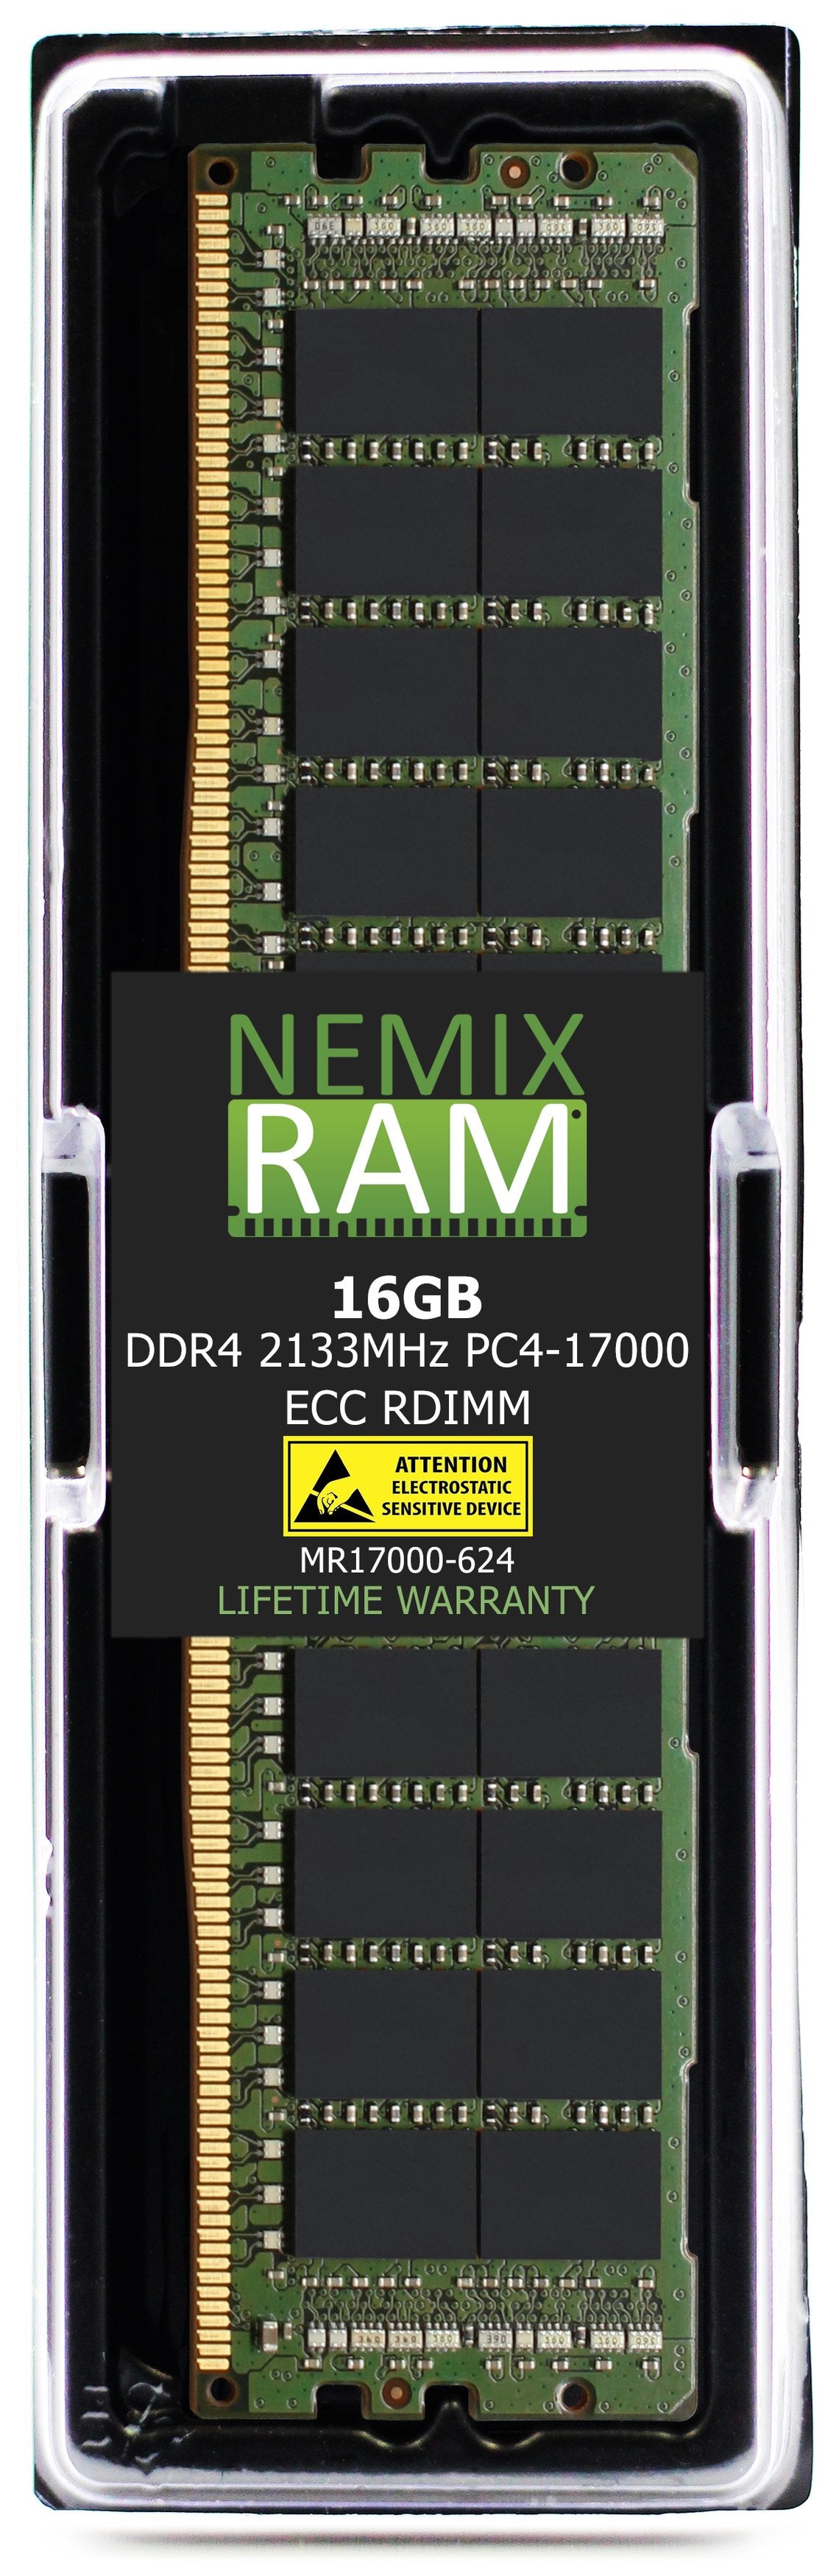 Hynix HHMA82GR8MMR4N-TF 16GB DDR4 2133MHZ PC4-17000 RDIMM Compatible Memory Module